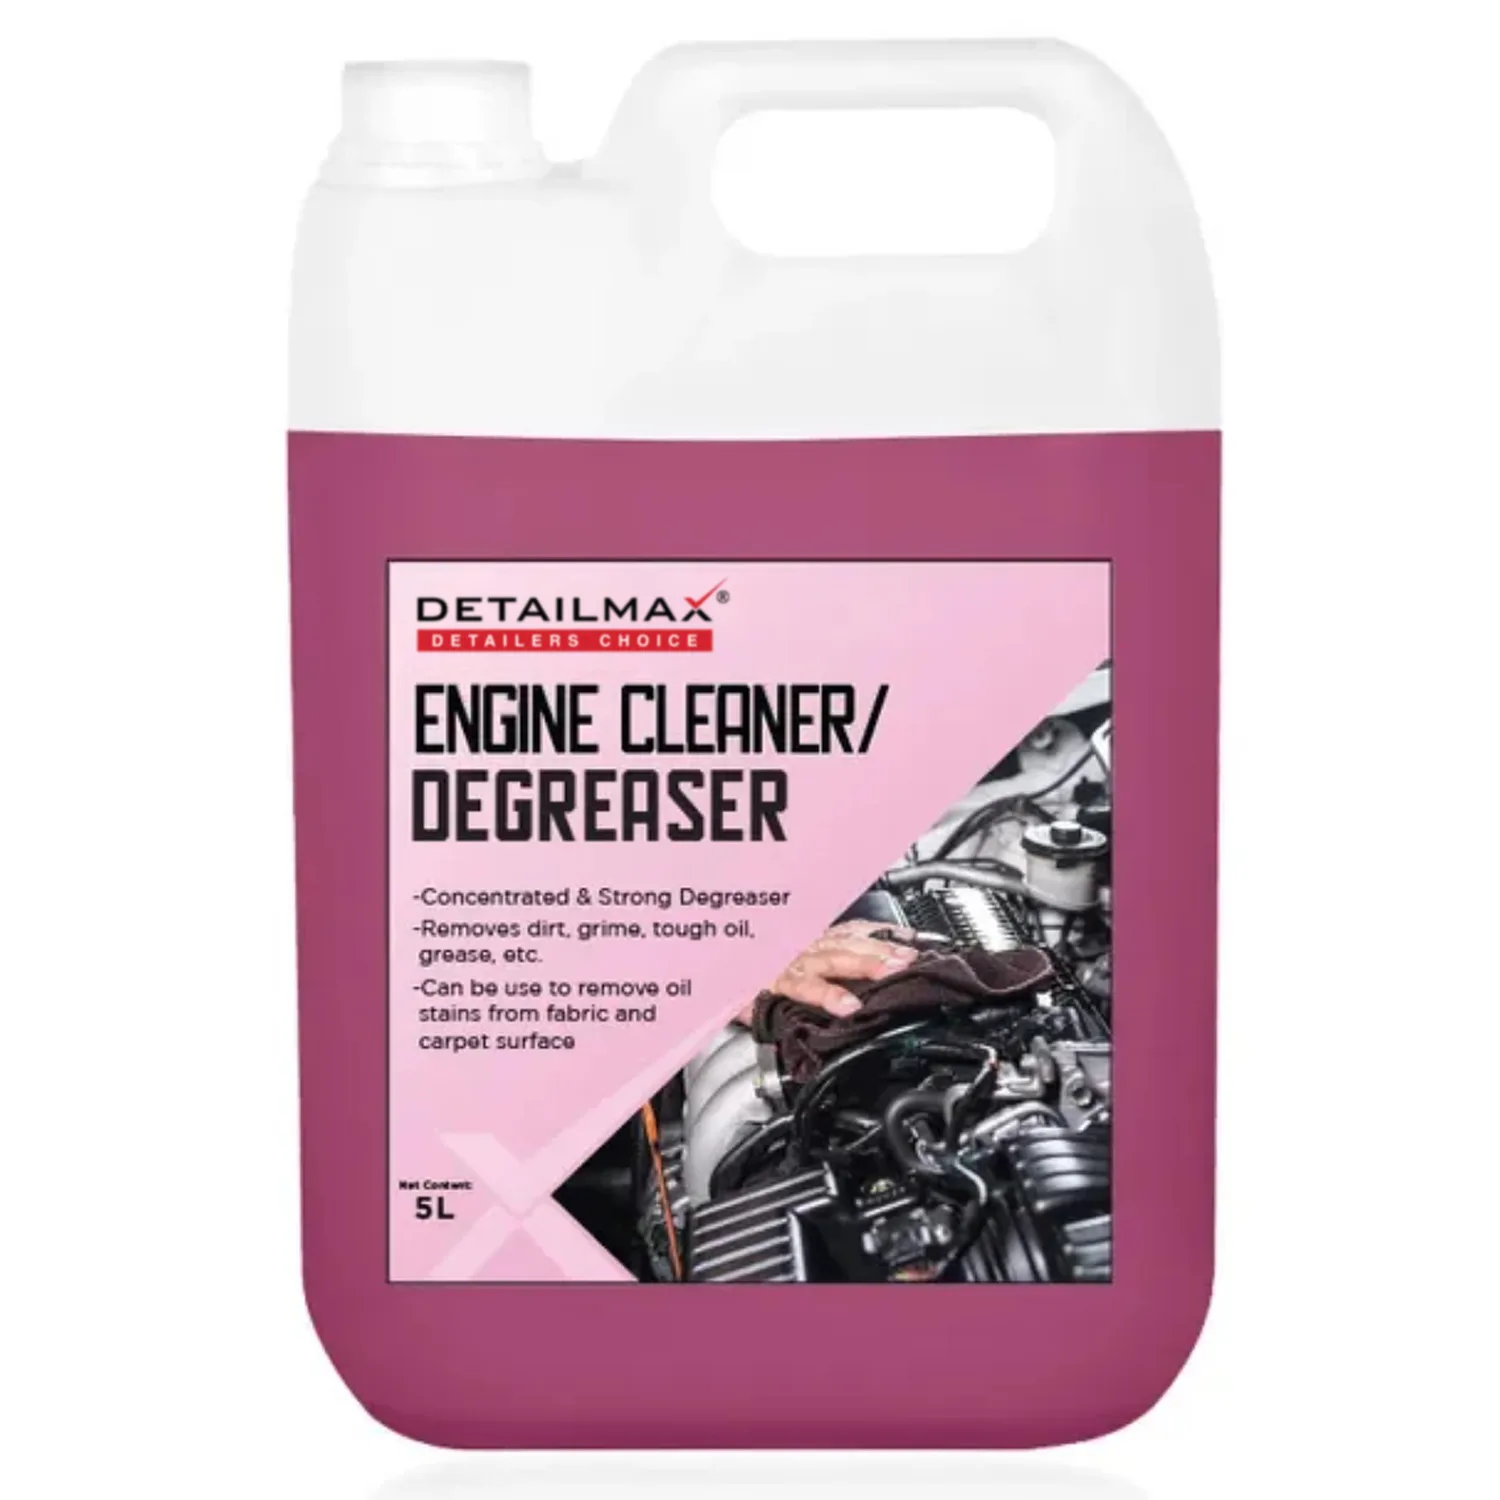 Buy Engine cleaner online